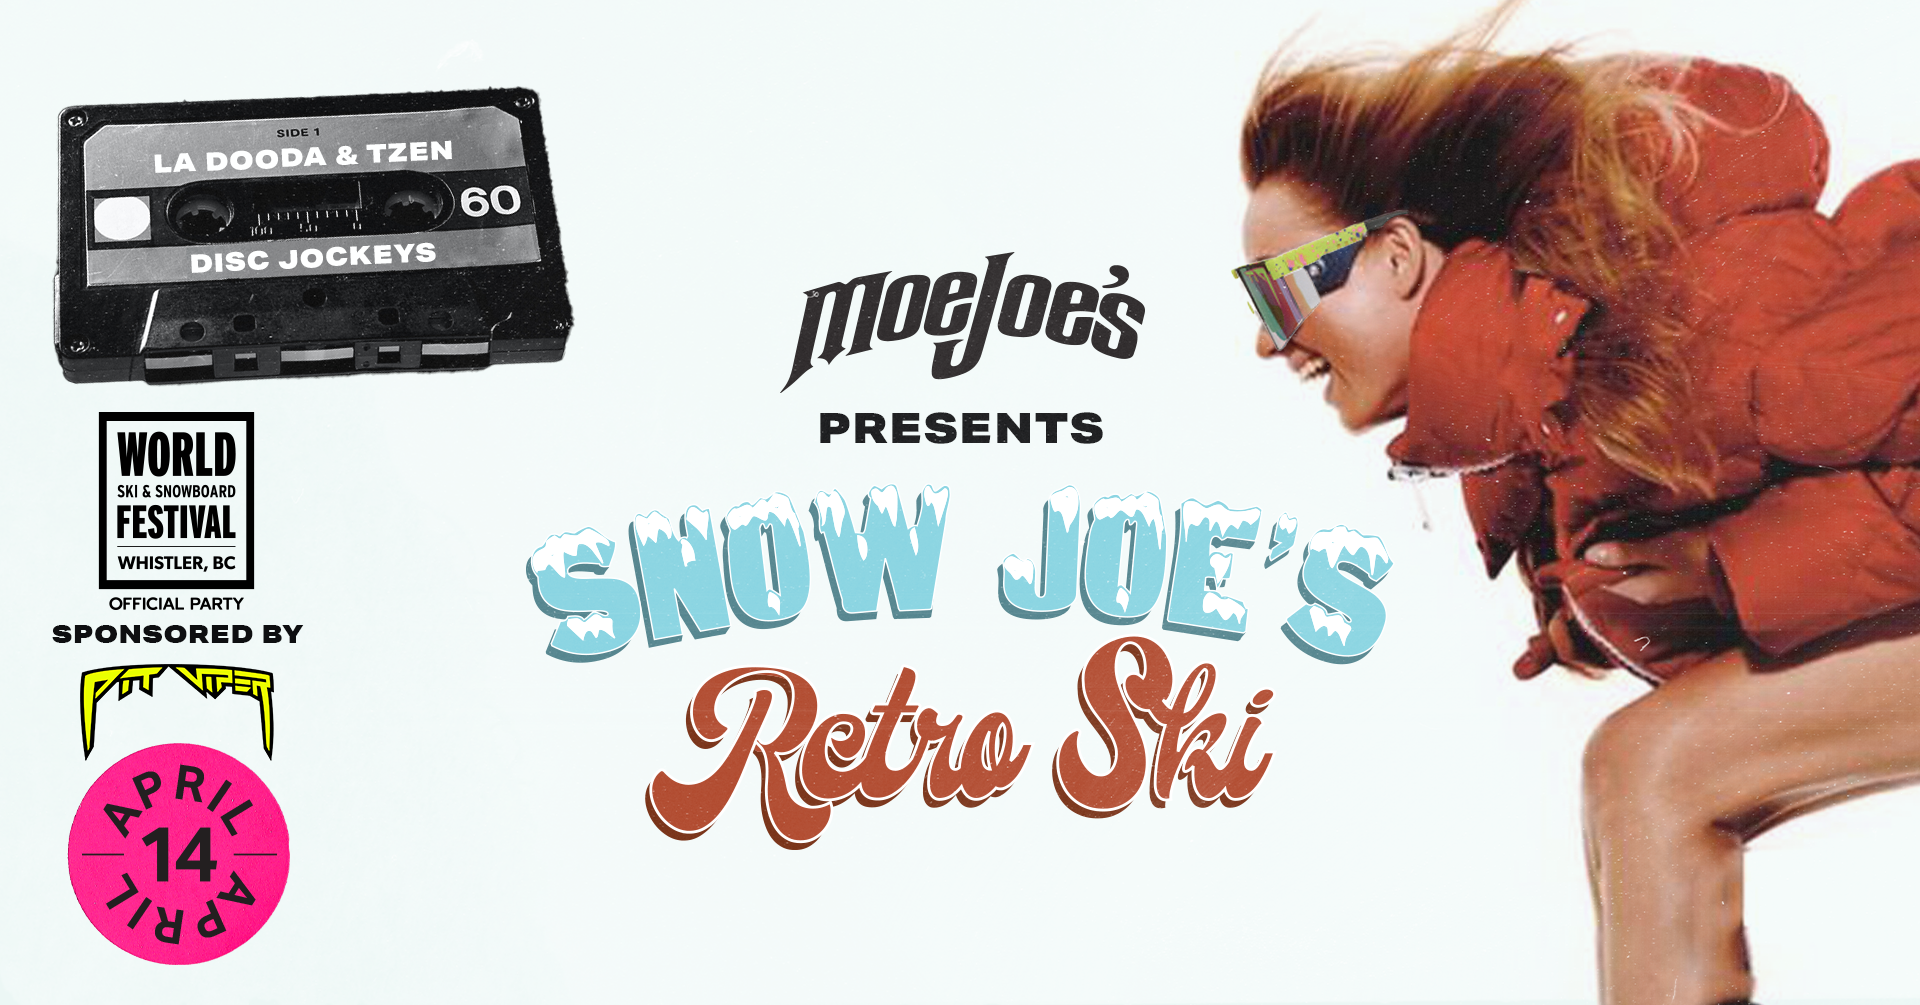 Snow Joe's Retro Ski - Sponsored by Pit Viper